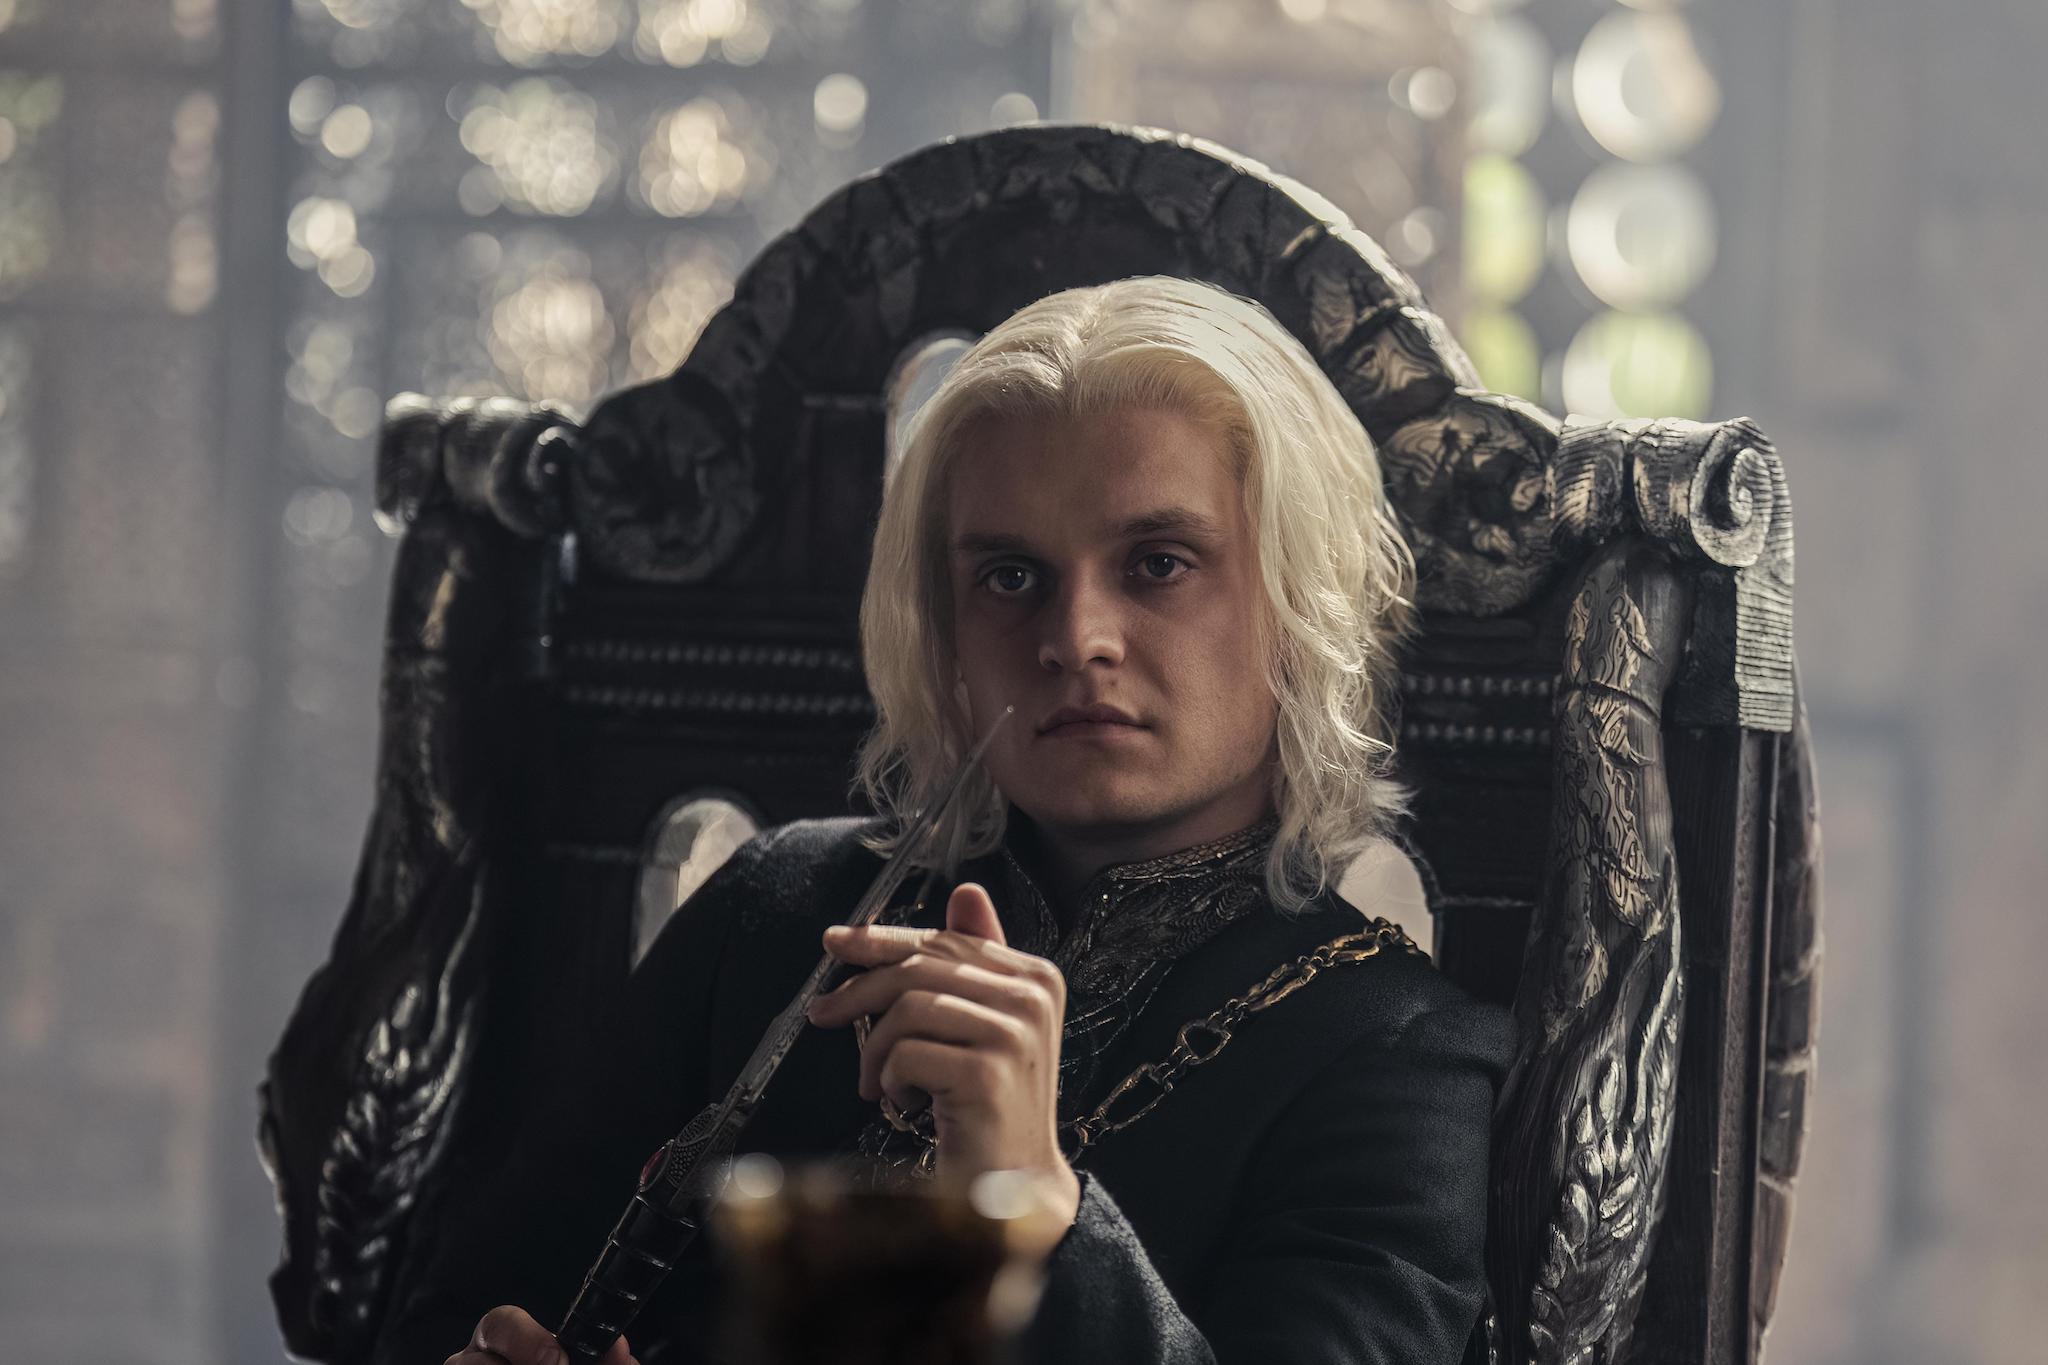 Glynn-Carney steals scenes as King Aegon II Targaryen in ‘House of the Dragon’